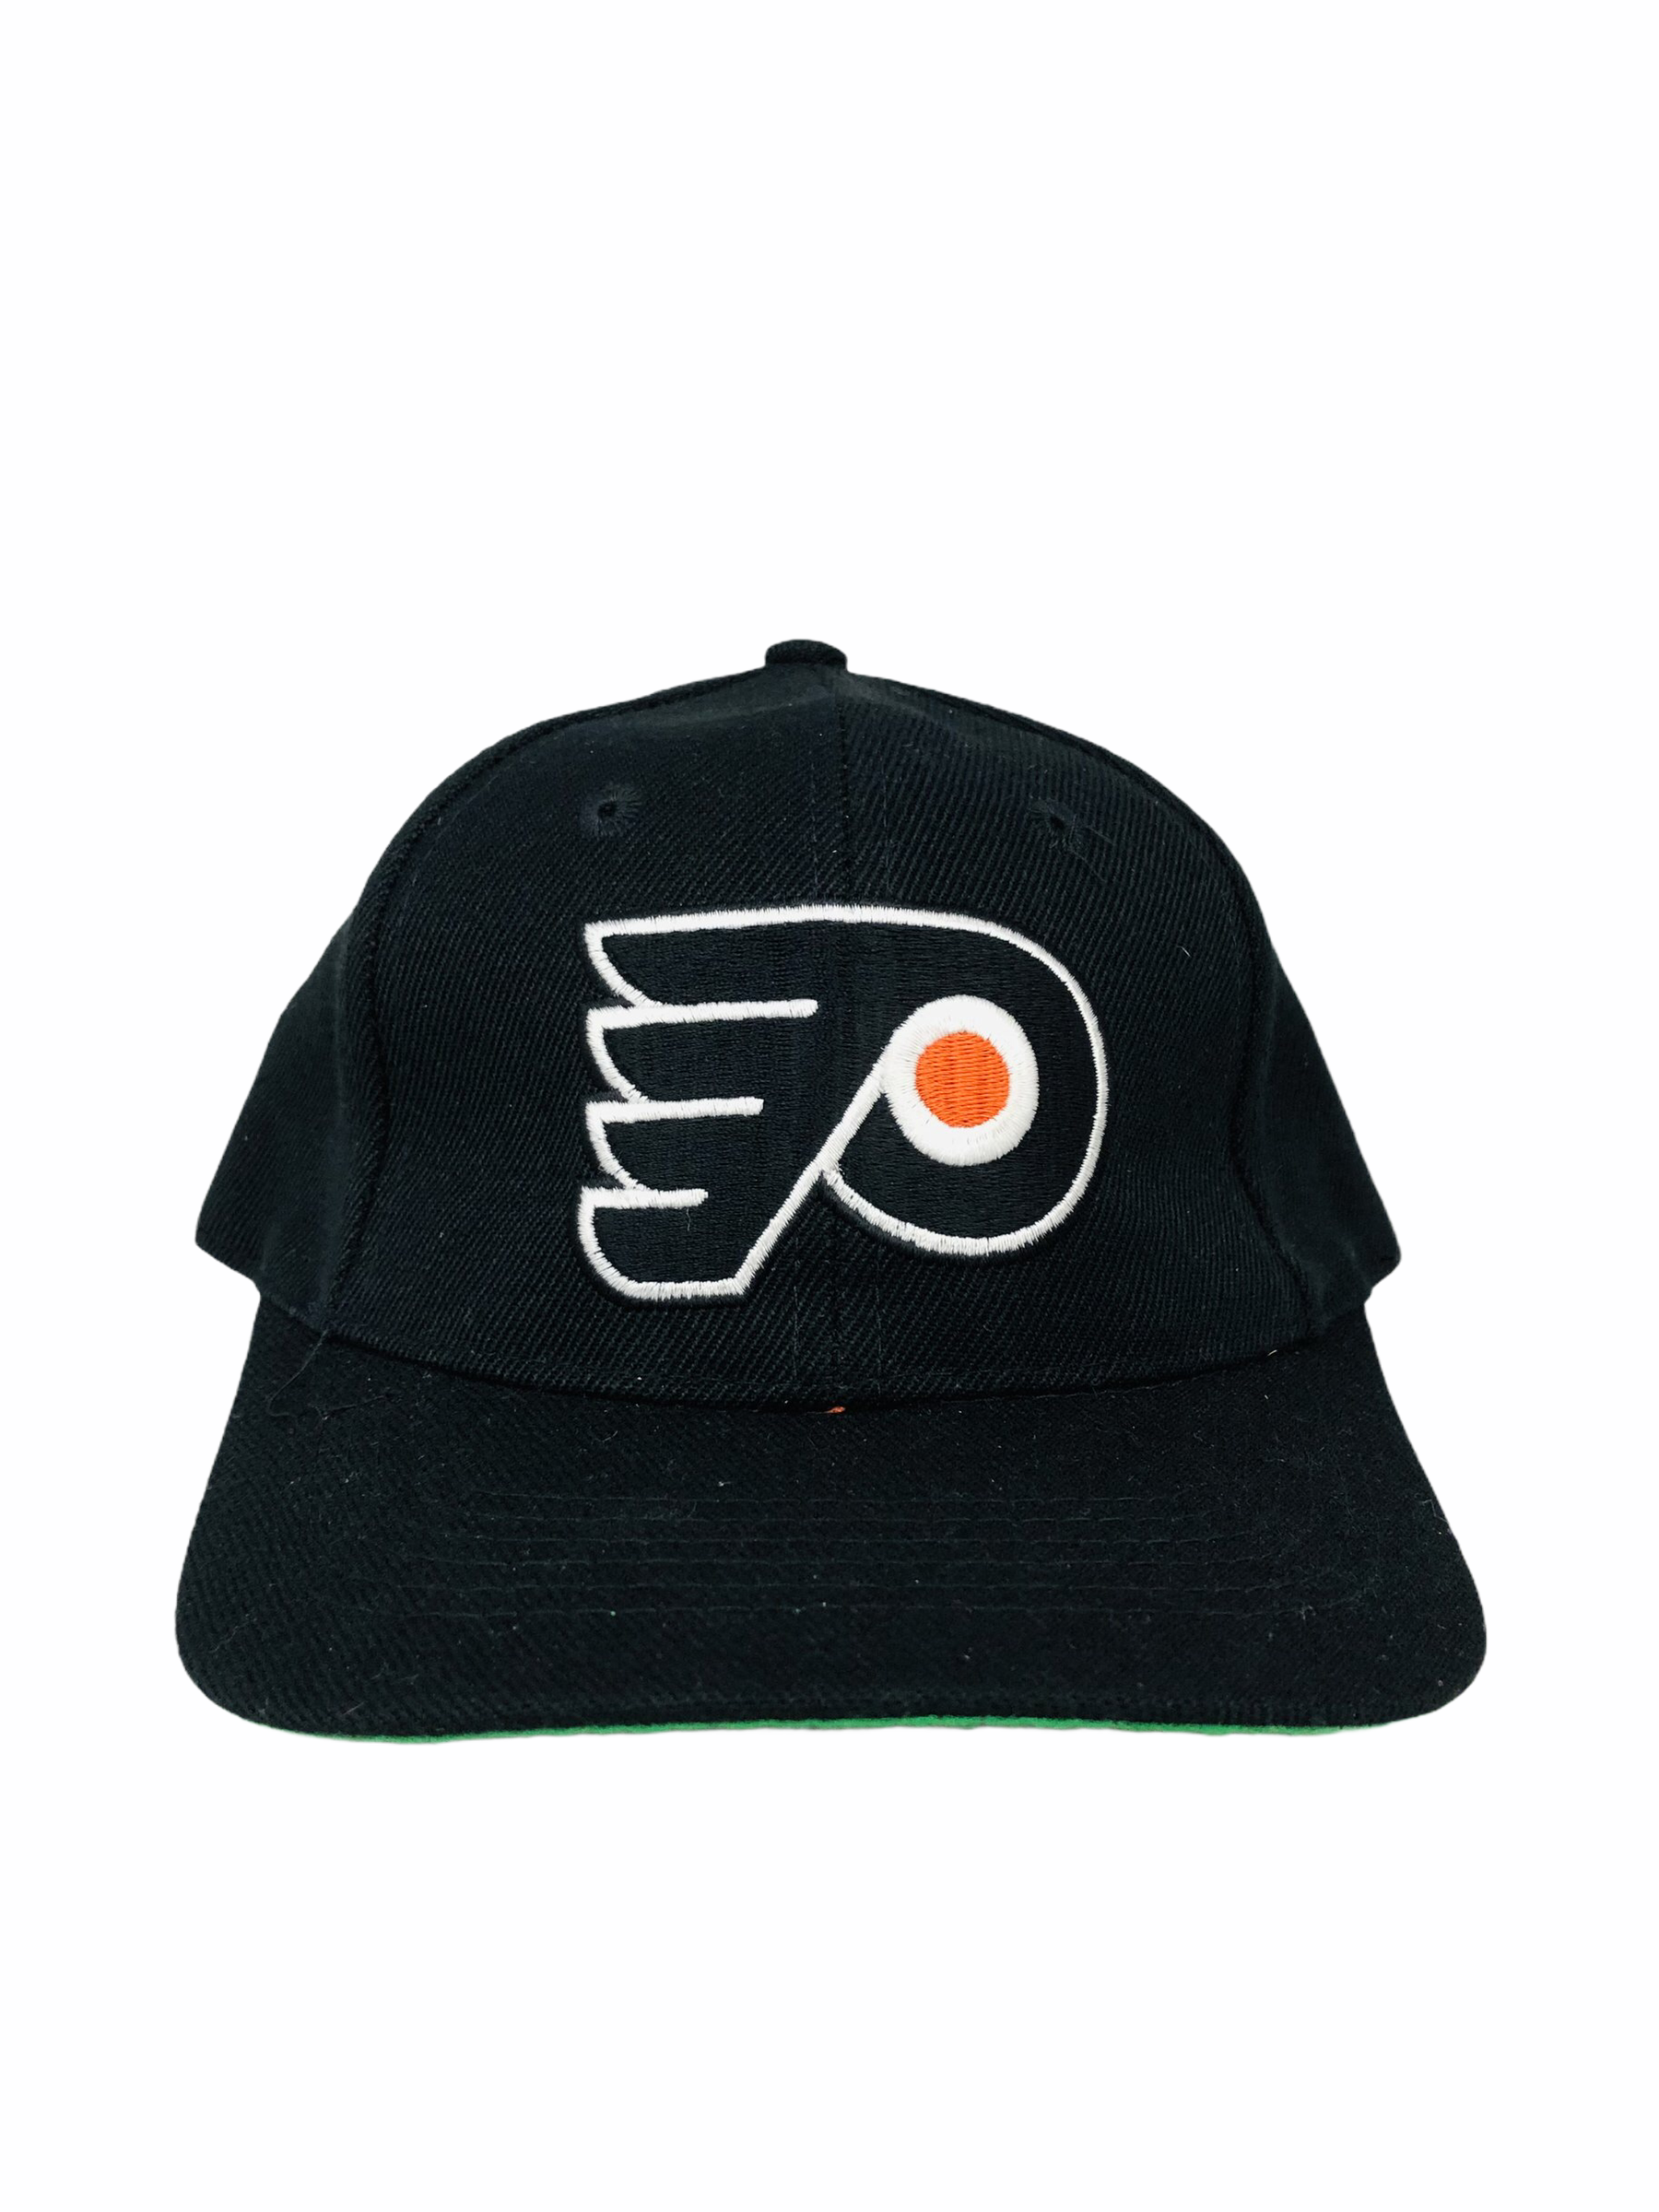 NHL Philadelphia Flyers Vintage Fitted Hat